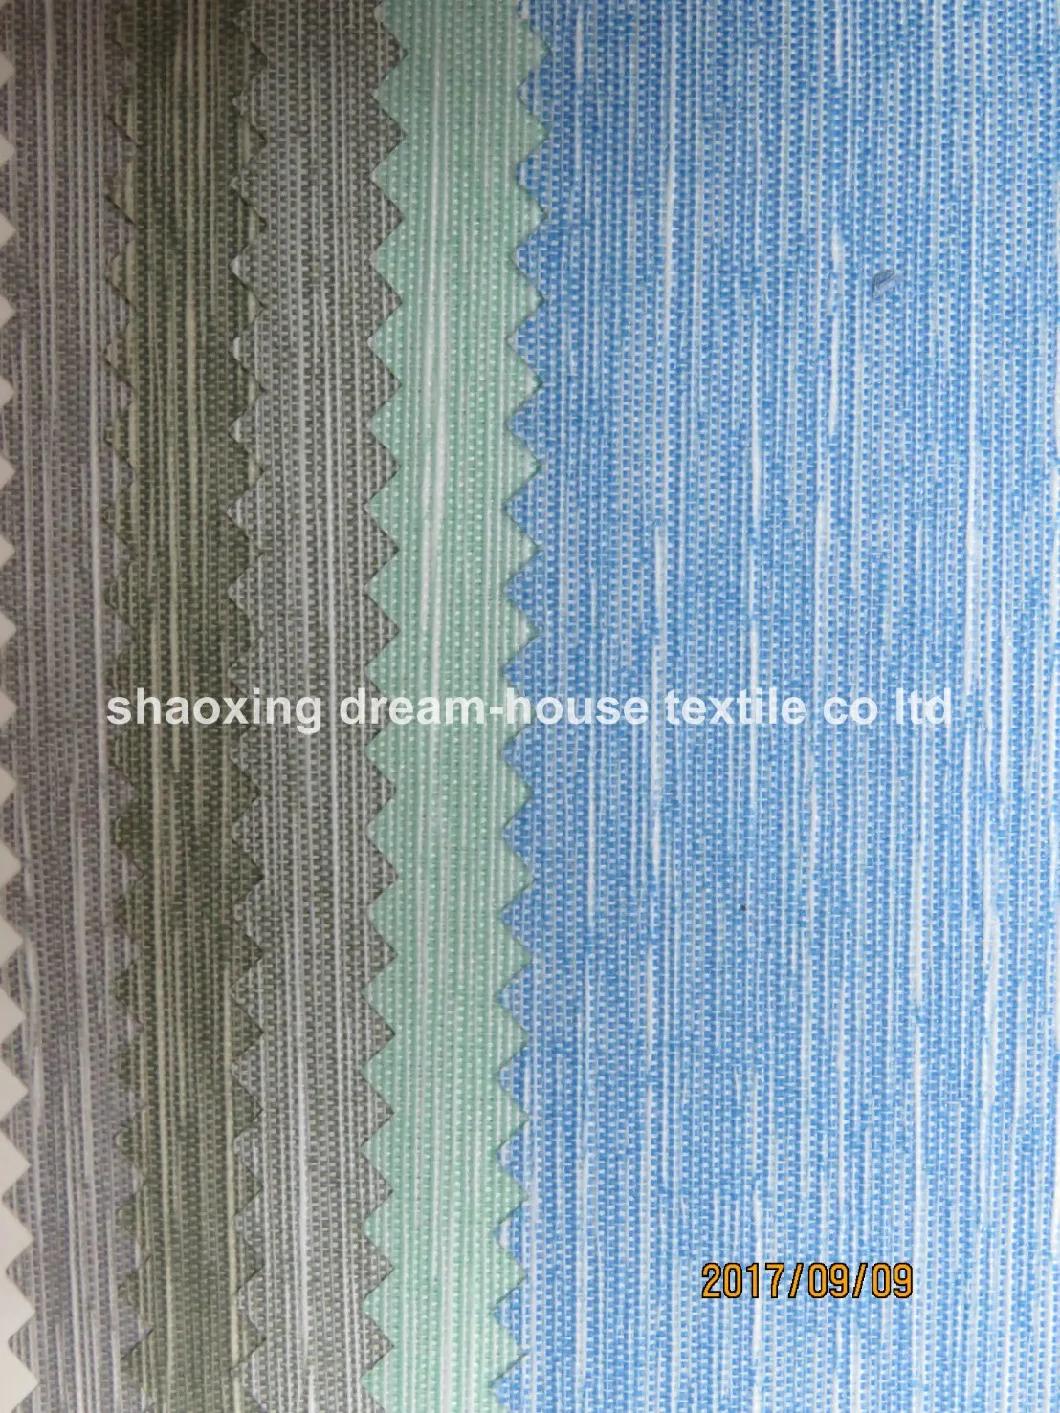 Wovenstripe Transparent Shade, Figured Stripe Transparent Blinds Fabric, Semi-Transparent Figuredstripe Blinds